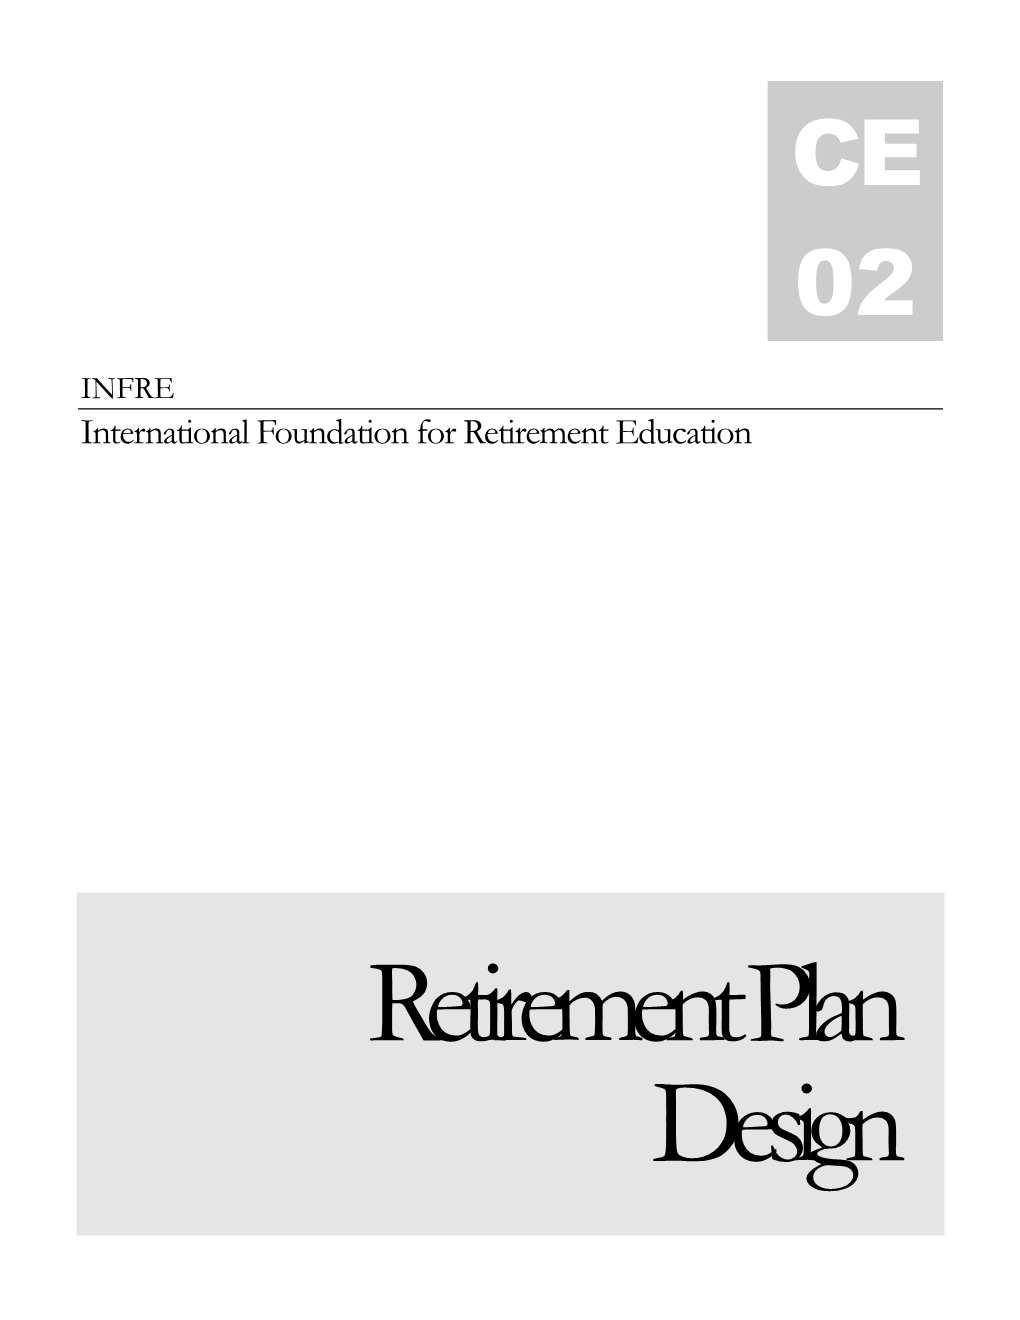 CE 02 INFRE International Foundation for Retirement Education